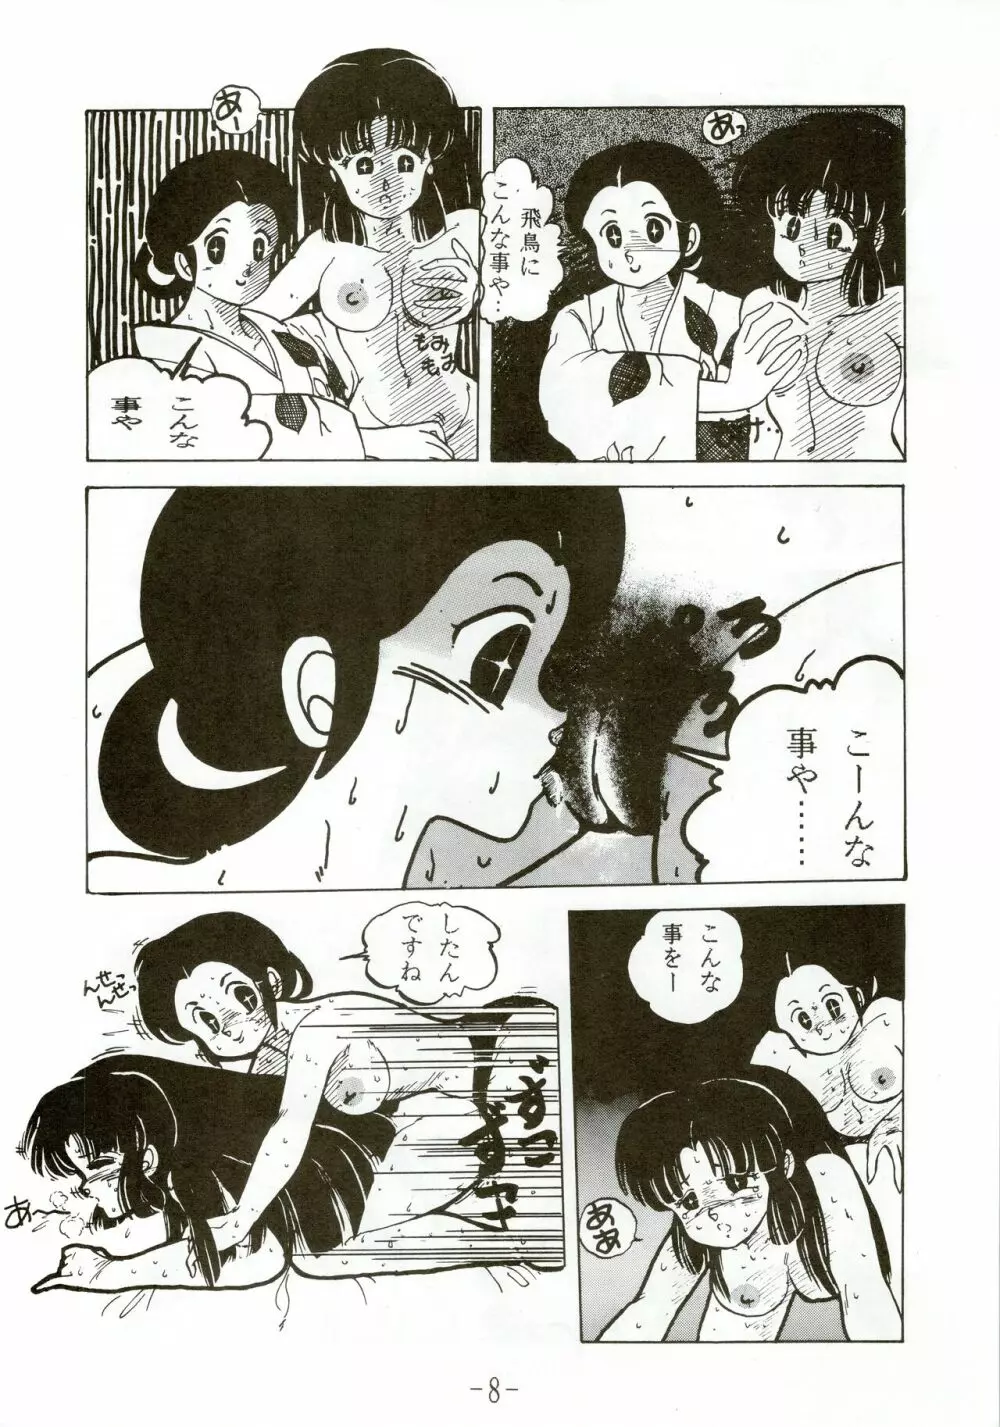 甲冑伝説 - page8